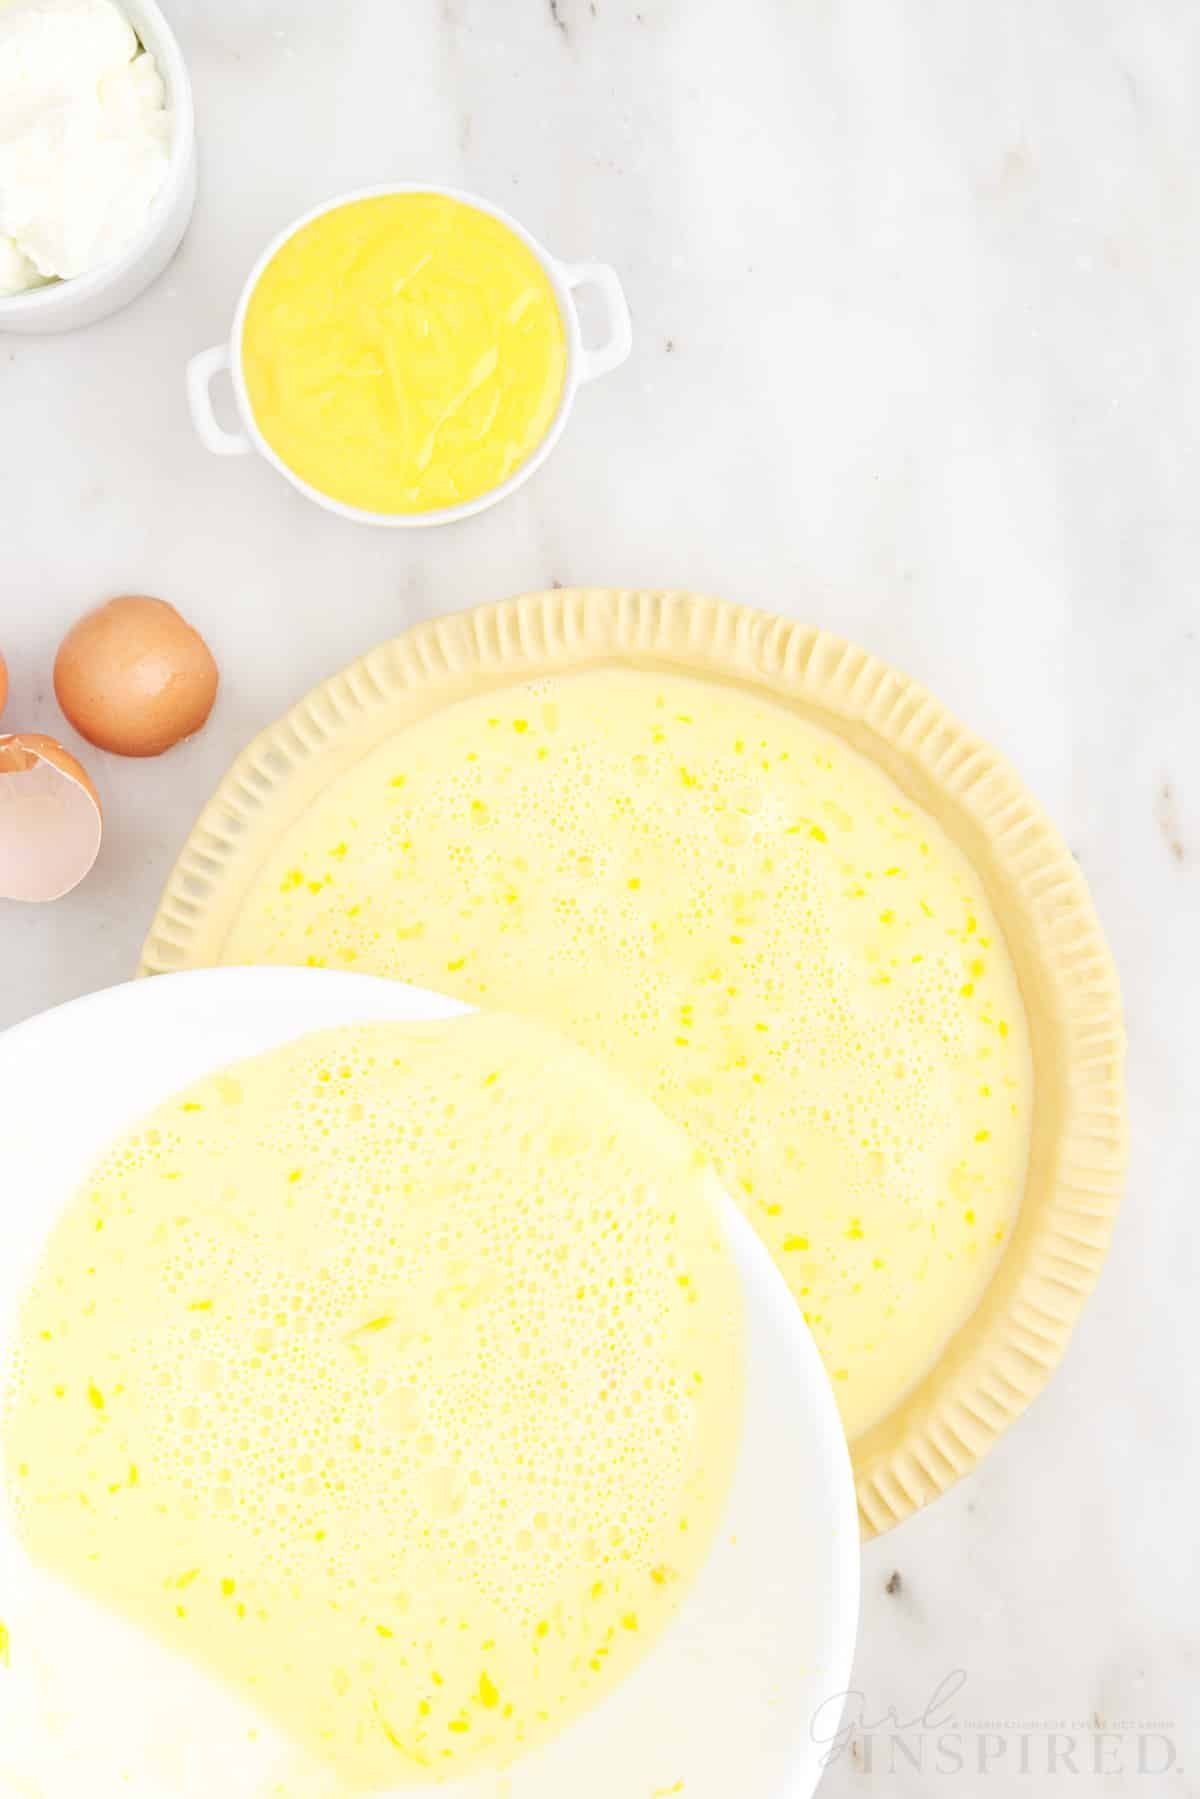 Egg milk mixture poured into a pie crust to make lemon custard pie.